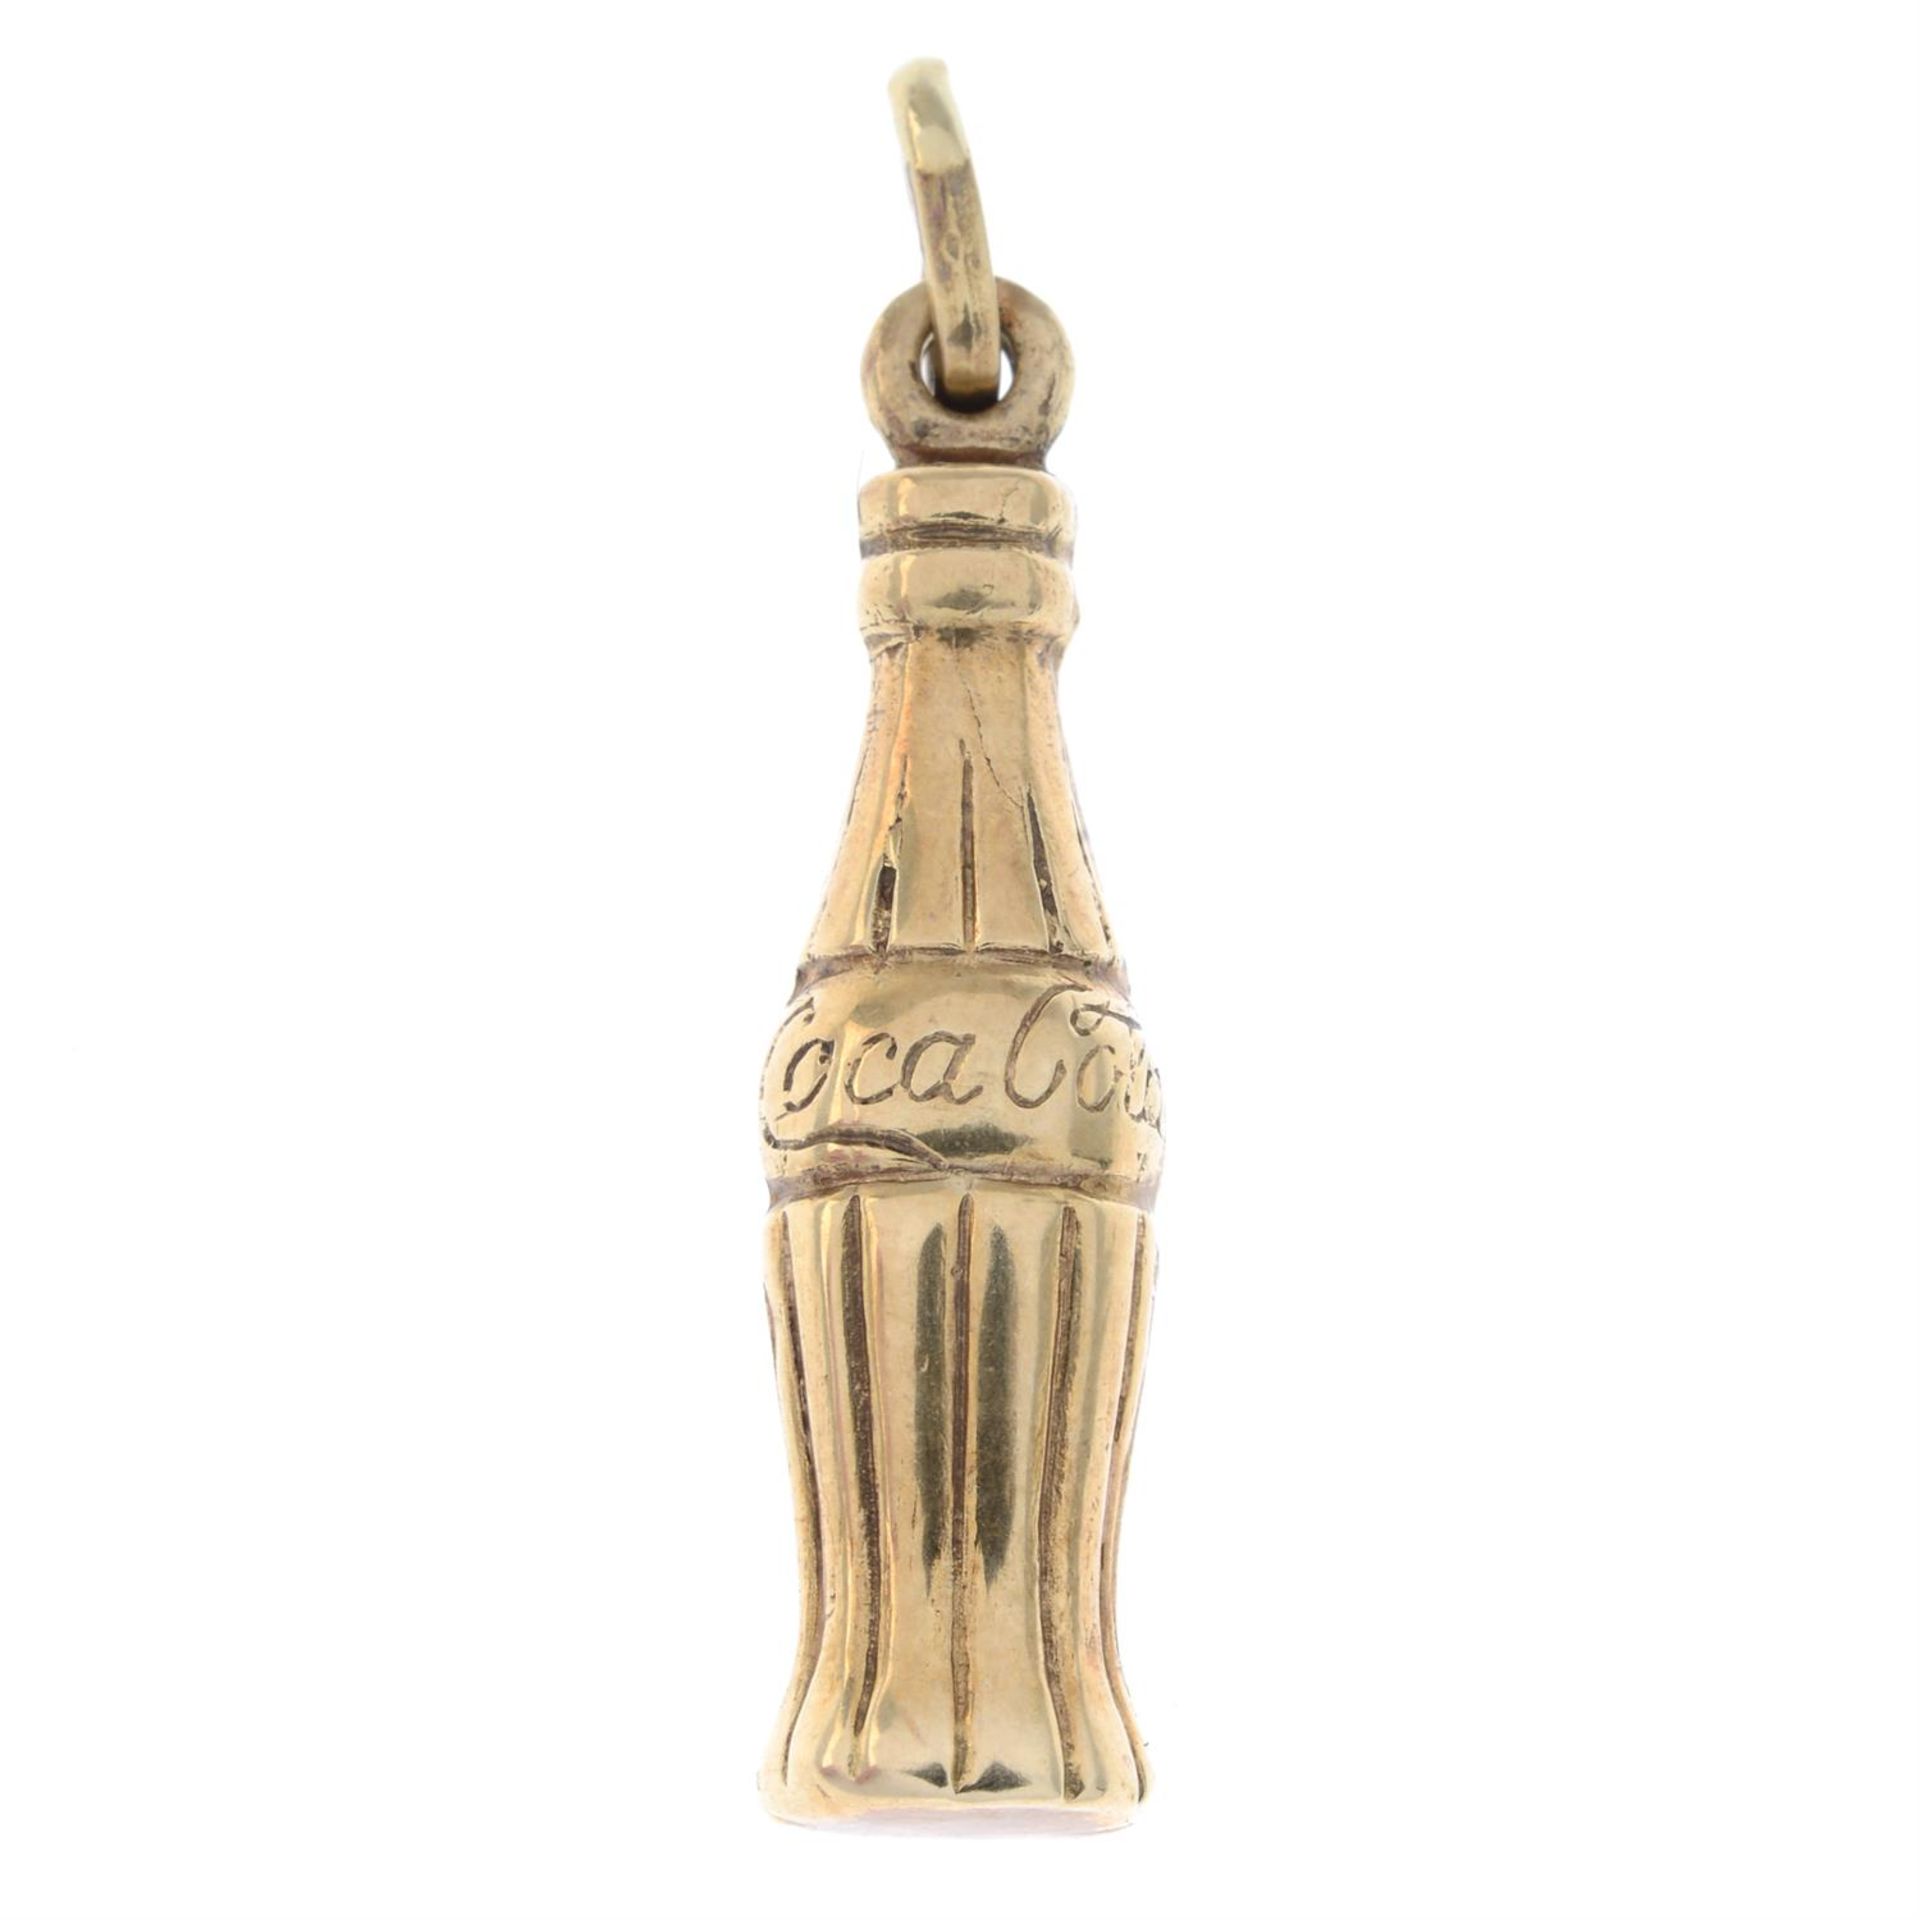 Mid 20th century Coca-Cola pendant/charm